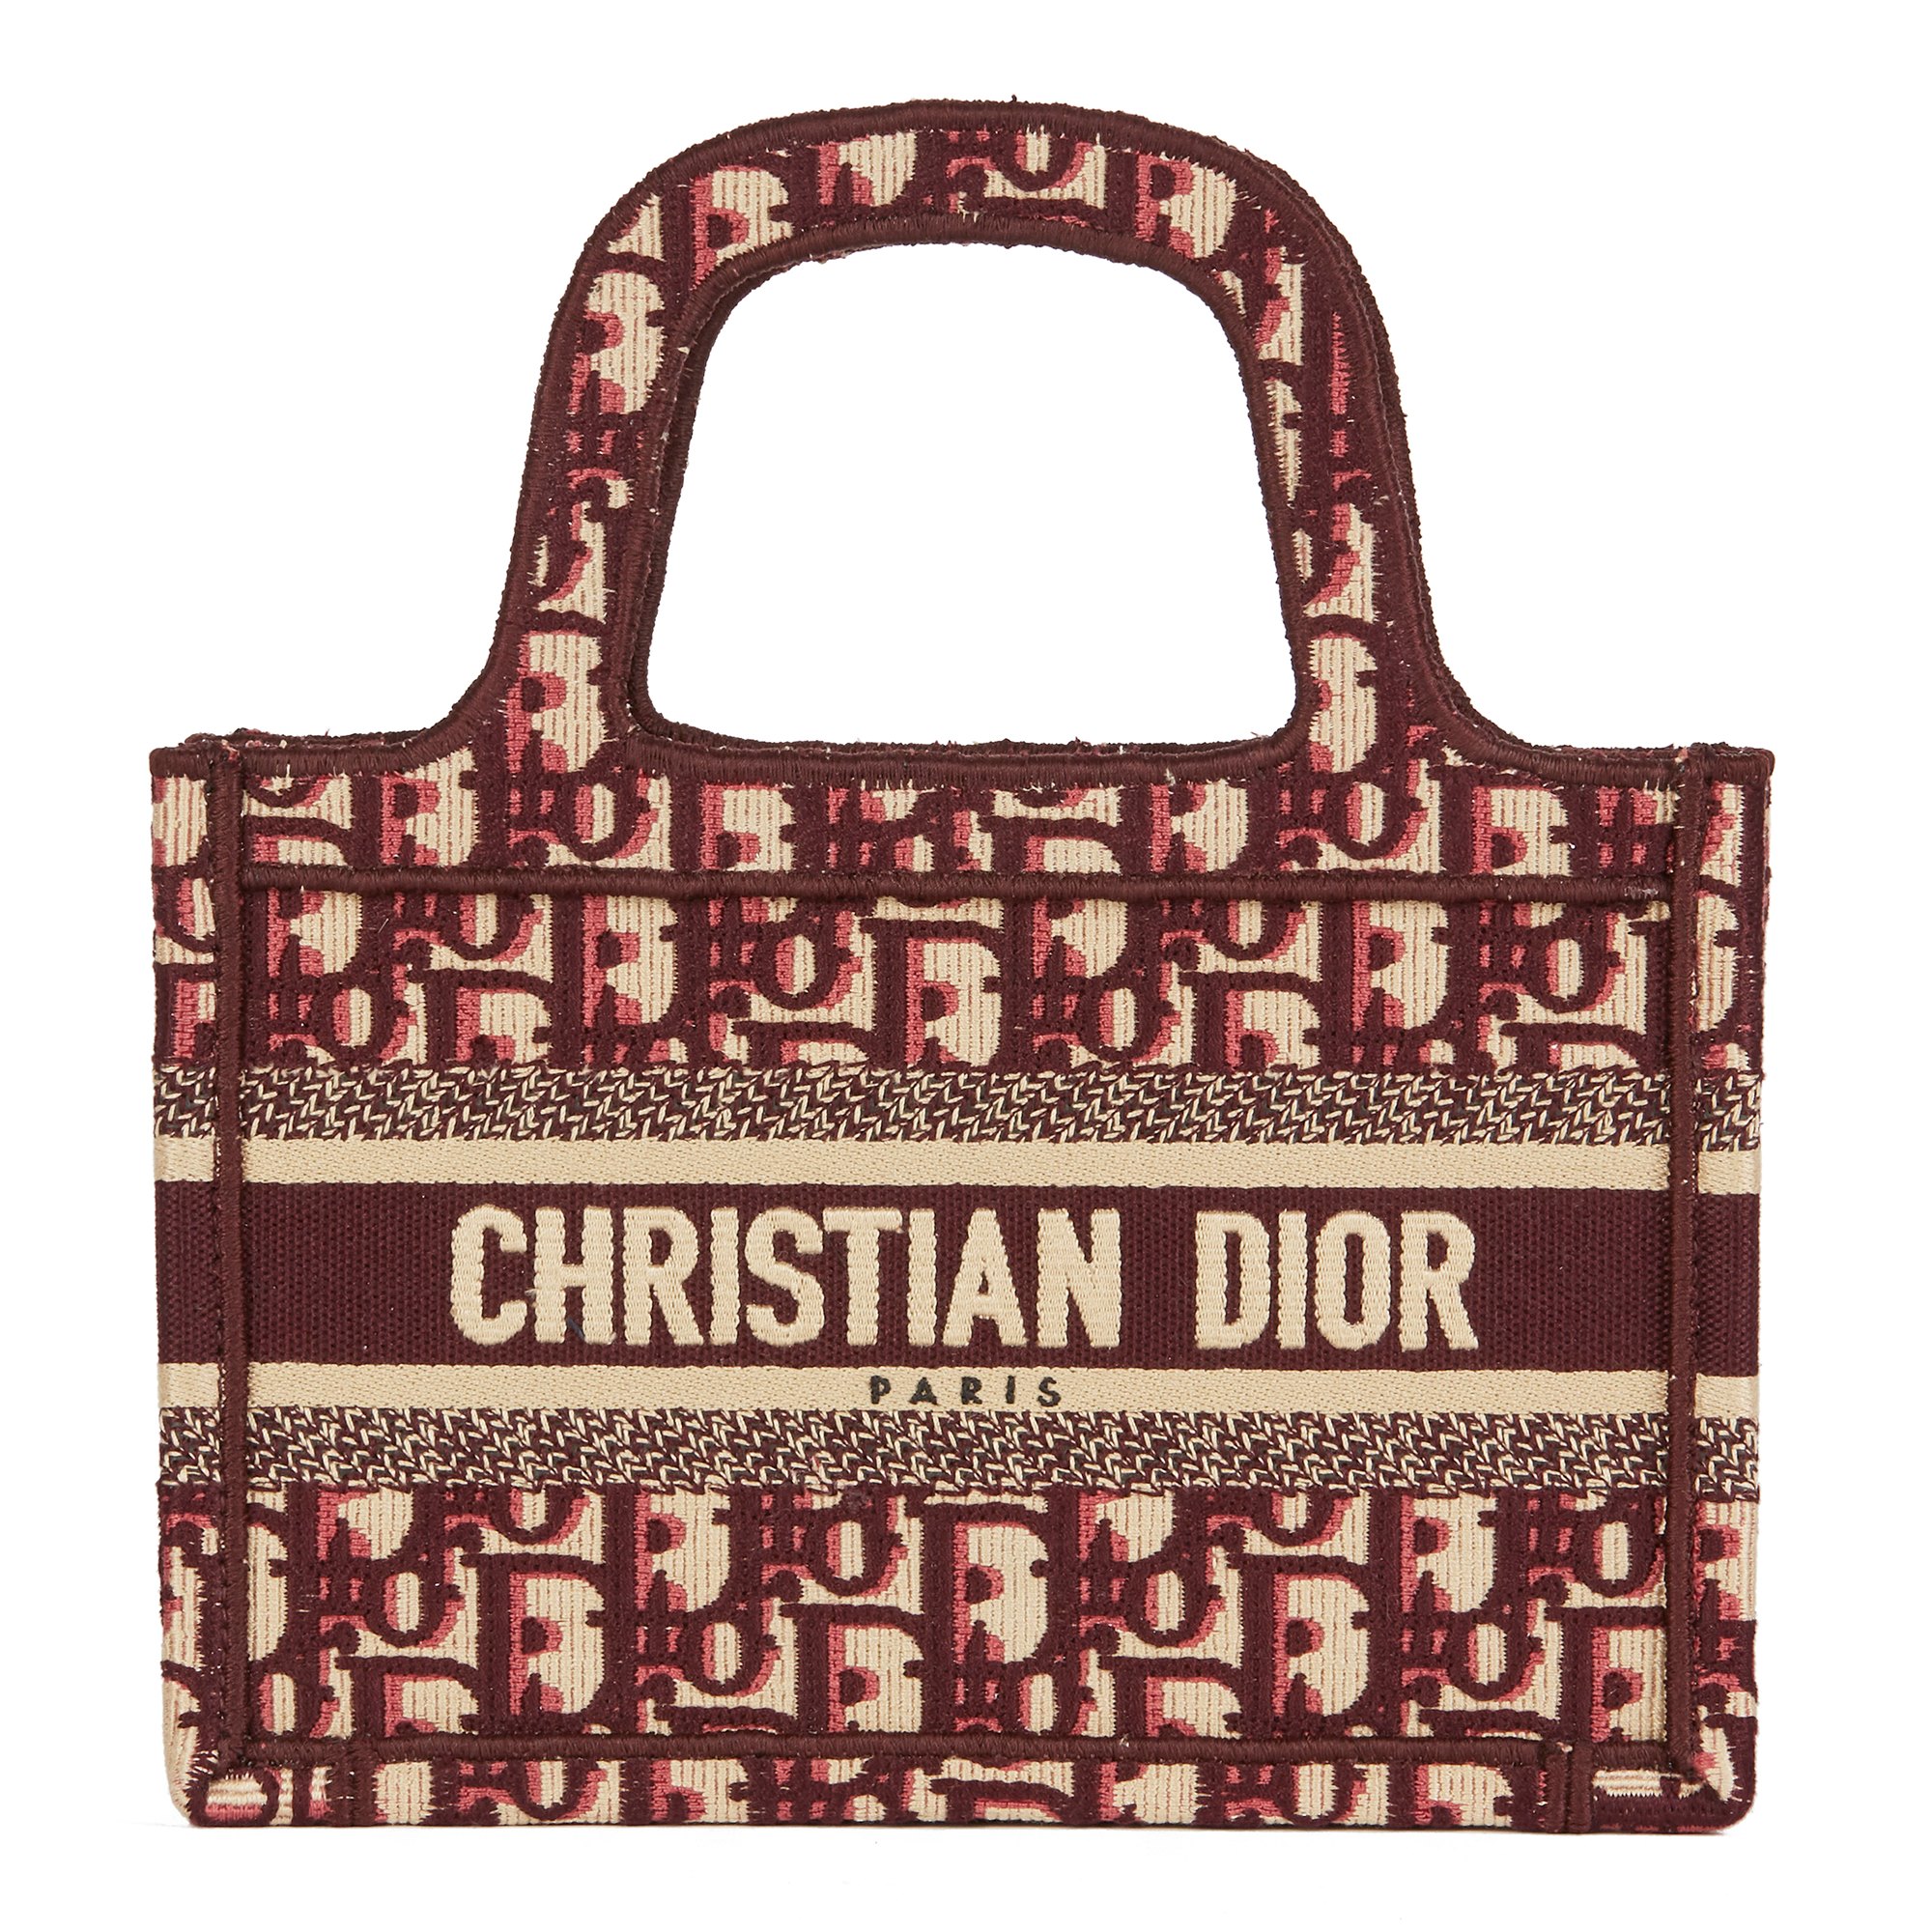 christian dior book bag